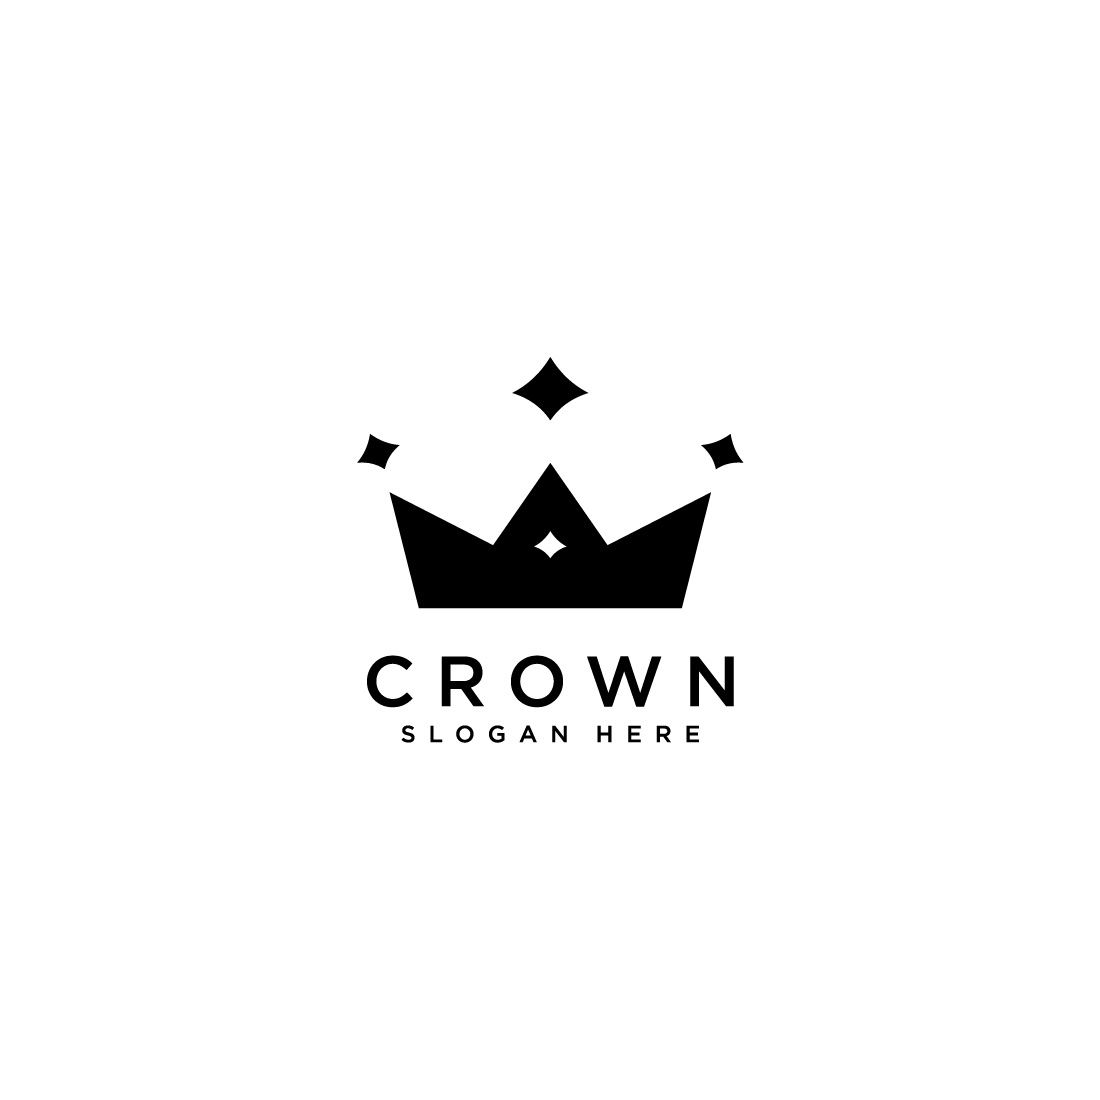 crown logo design preview image.